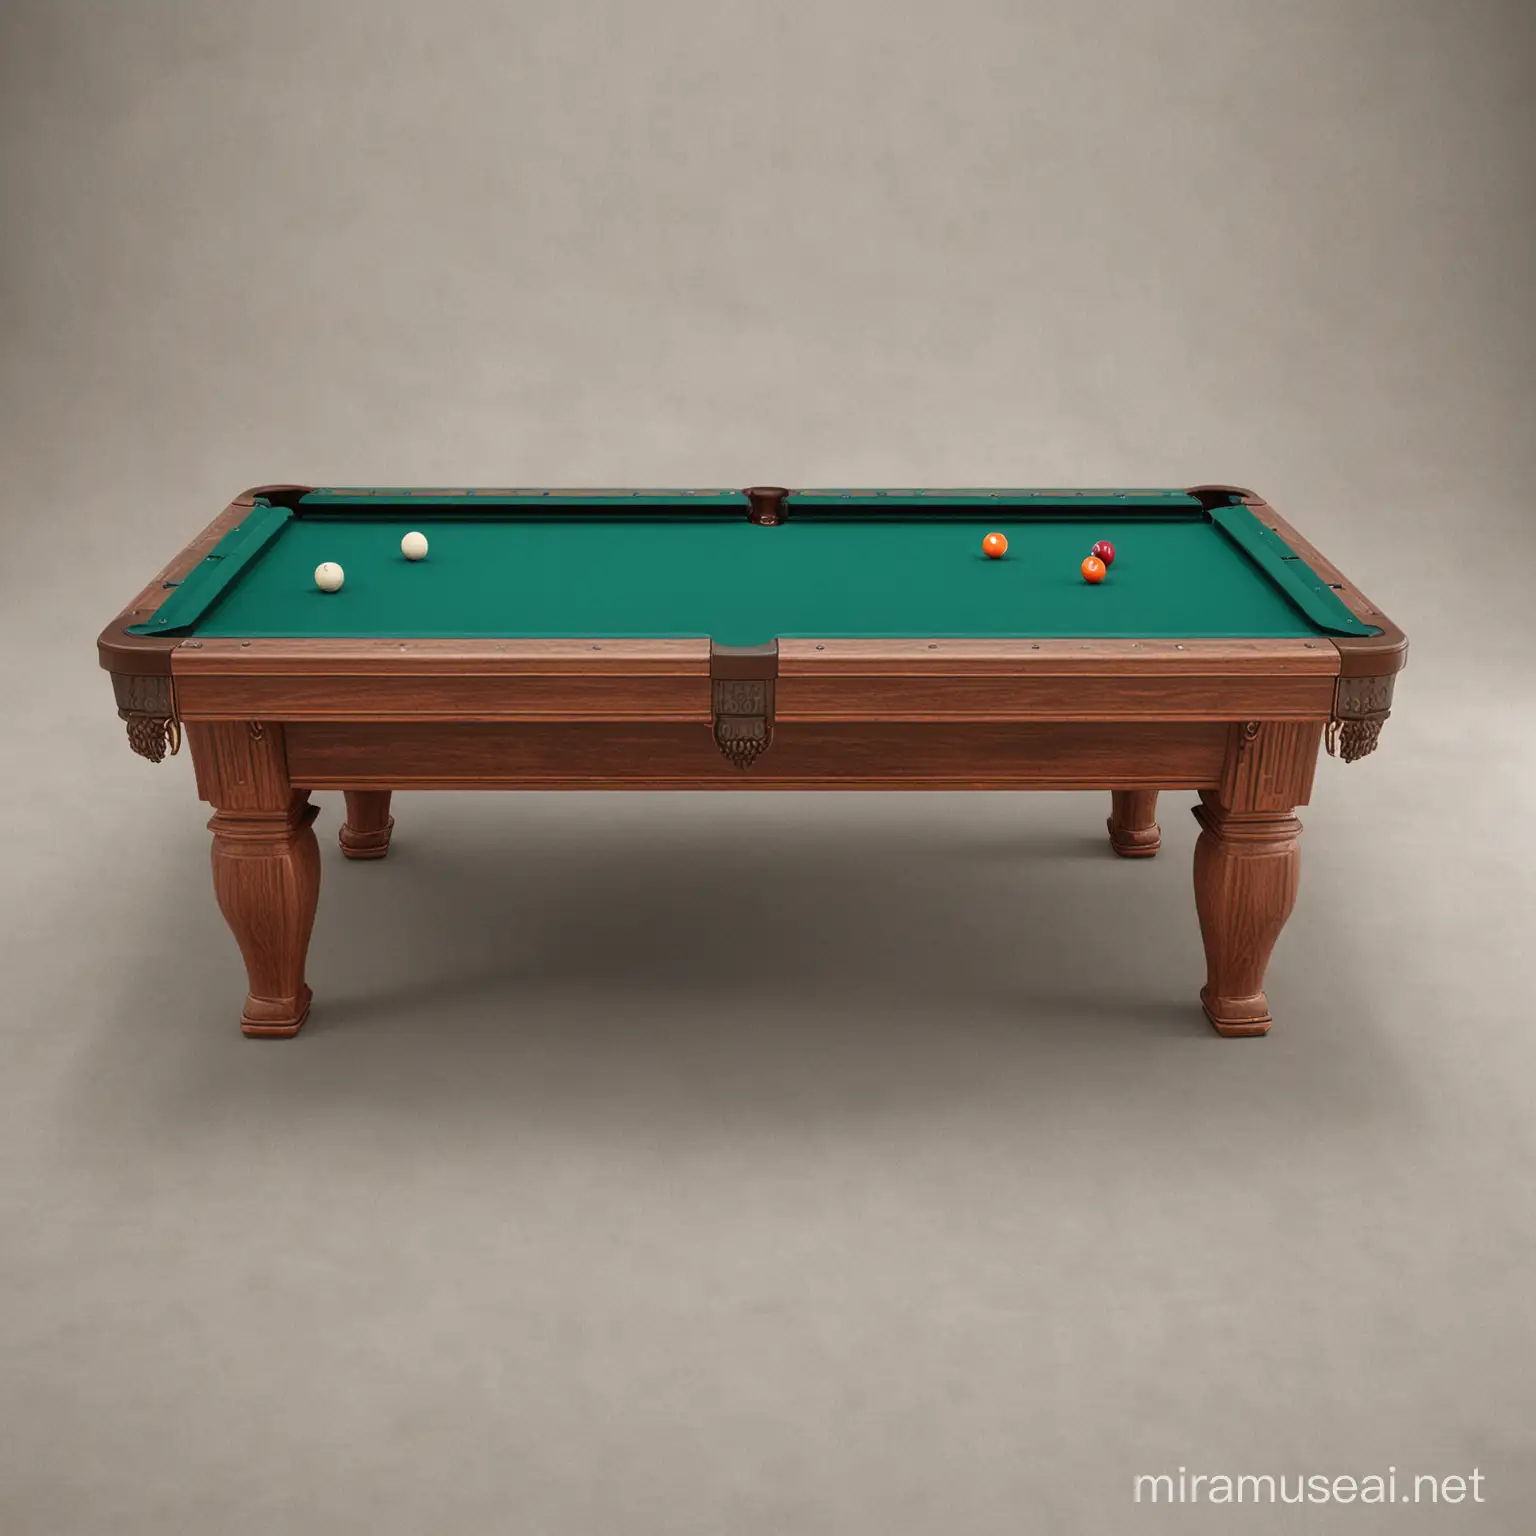 Vibrant Pool Table Scene with Unique Perspective